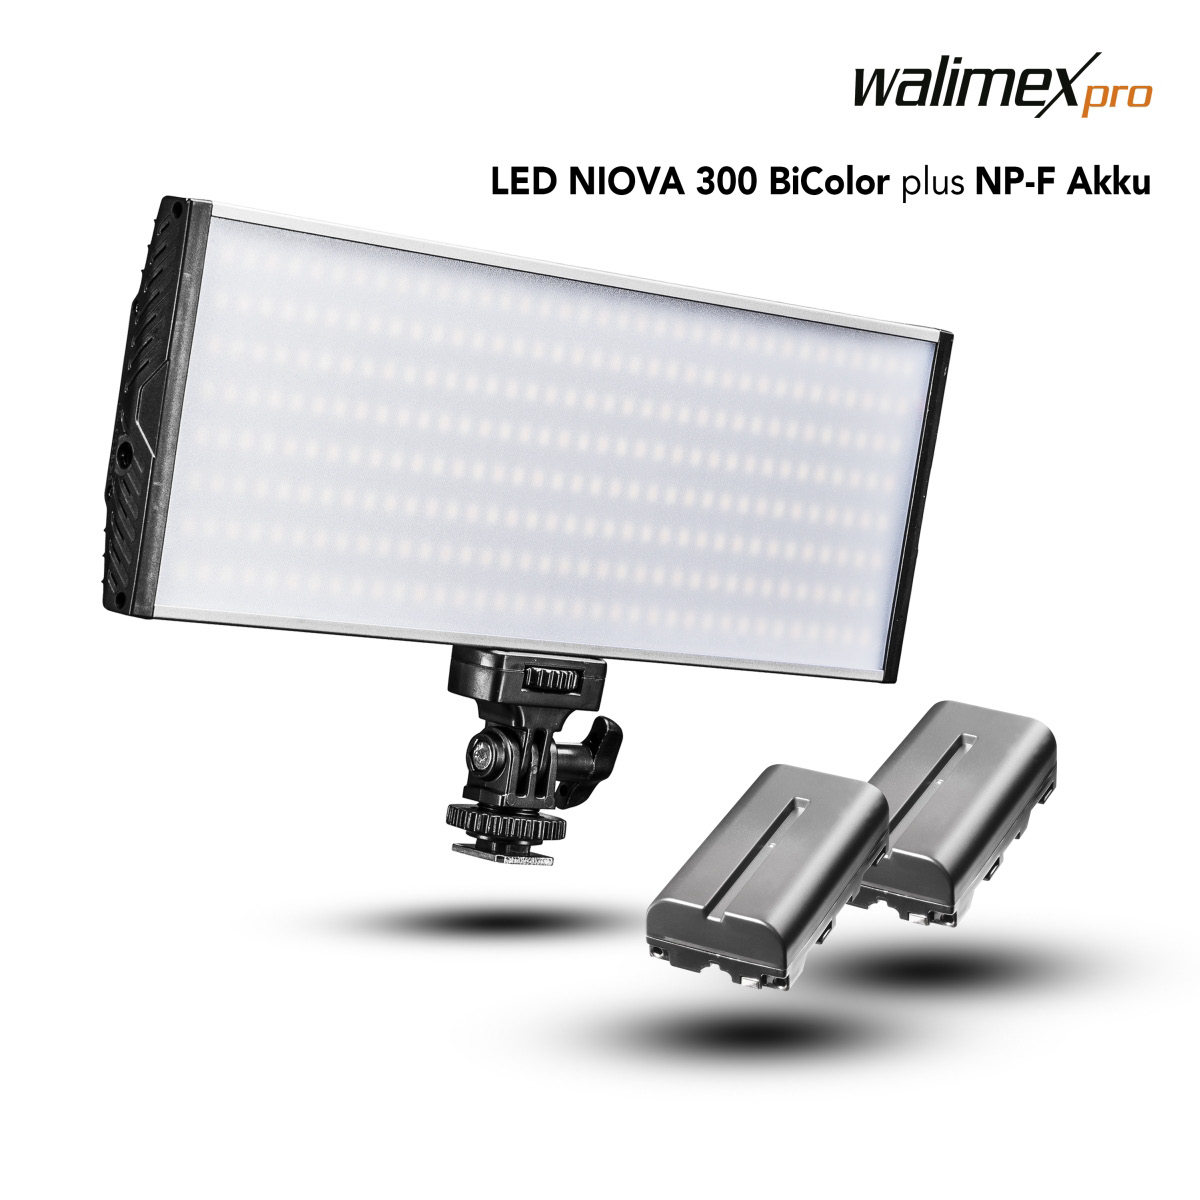 Walimex pro LED Niova 300 Bi Color plus NP-F Akku